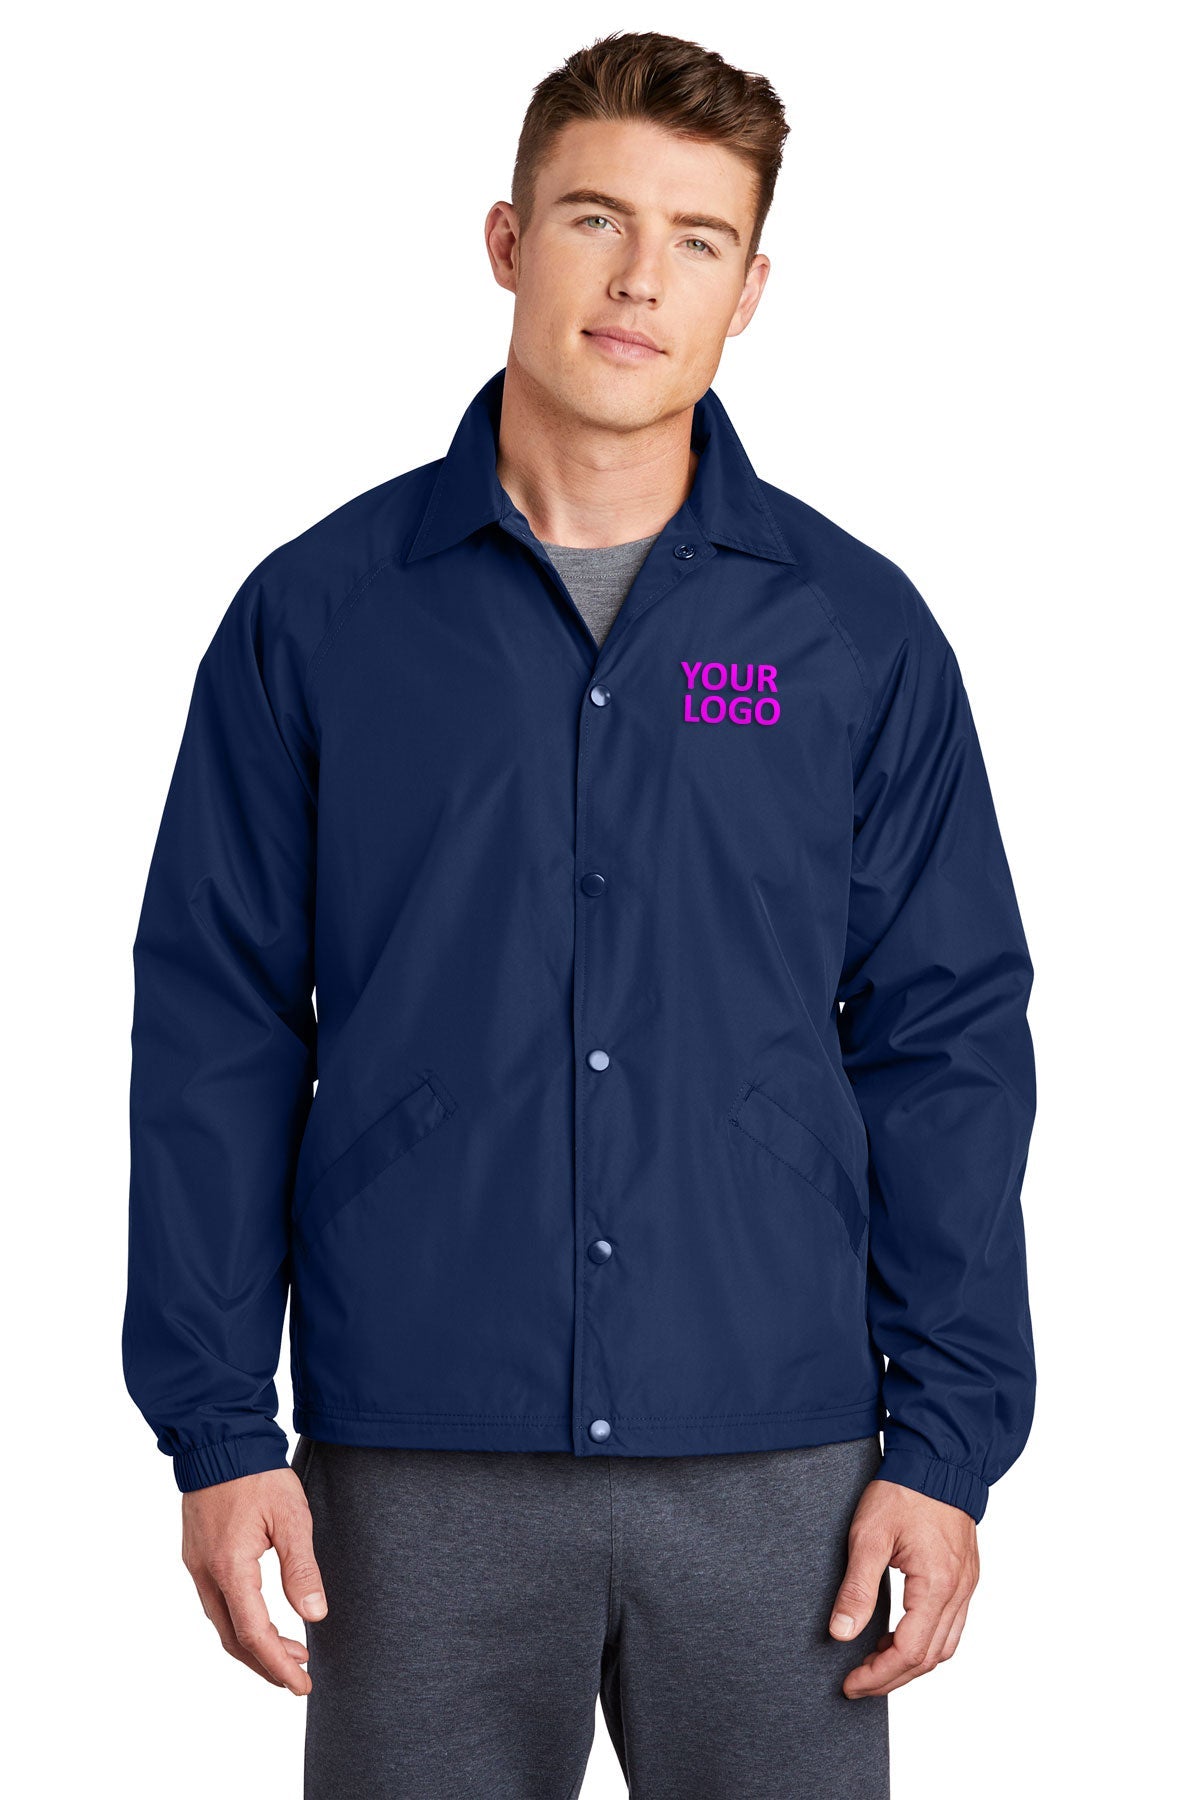 Sport-Tek True Navy JST71 embroidered jacket custom